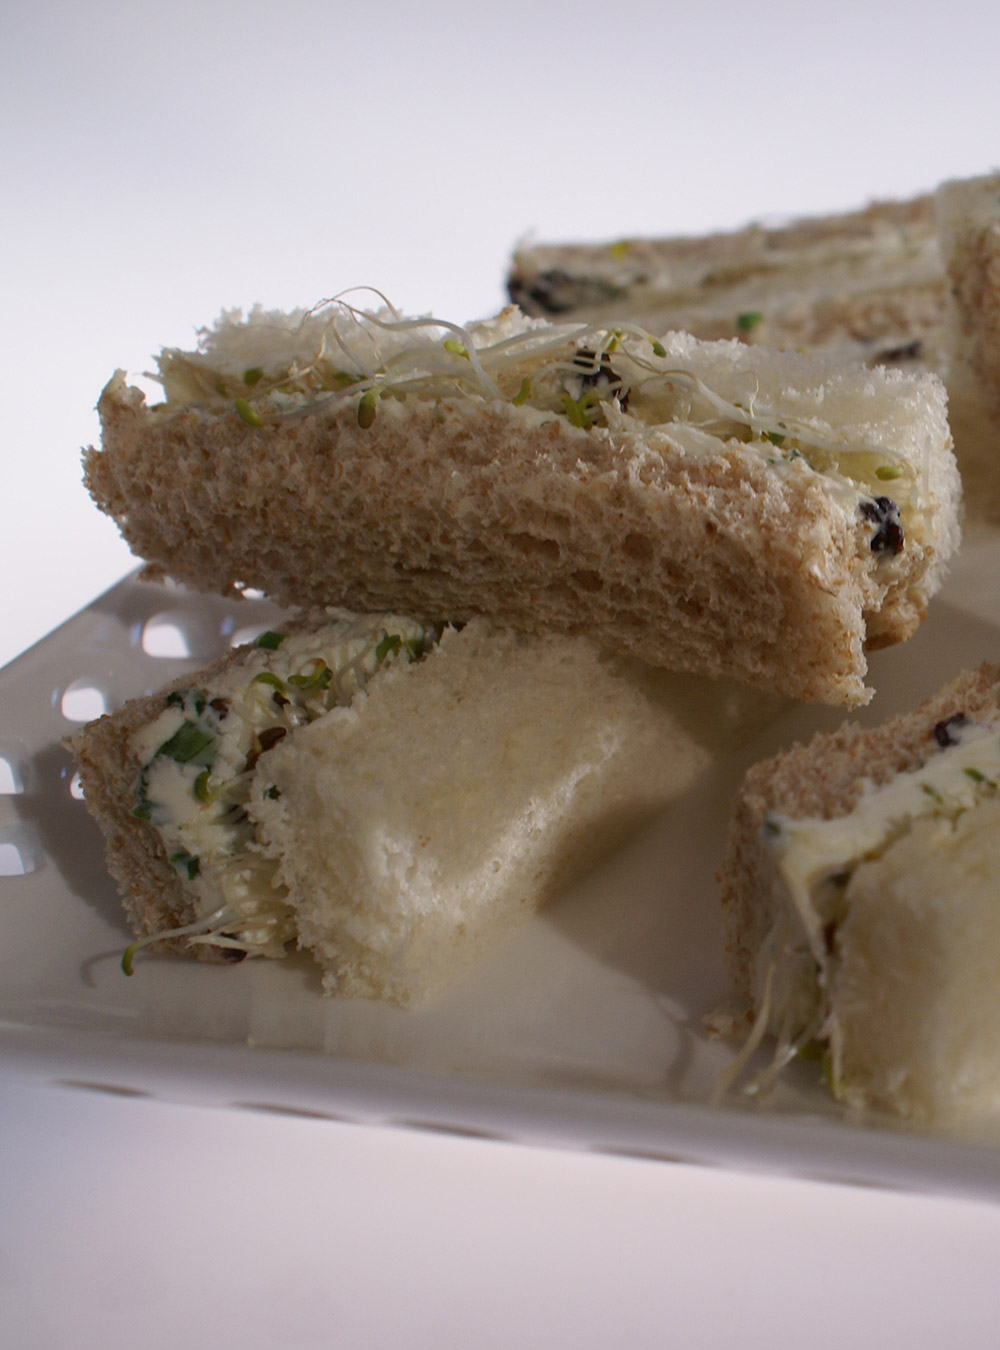 Cream cheese raisin and alfalfa sprout sandwiches